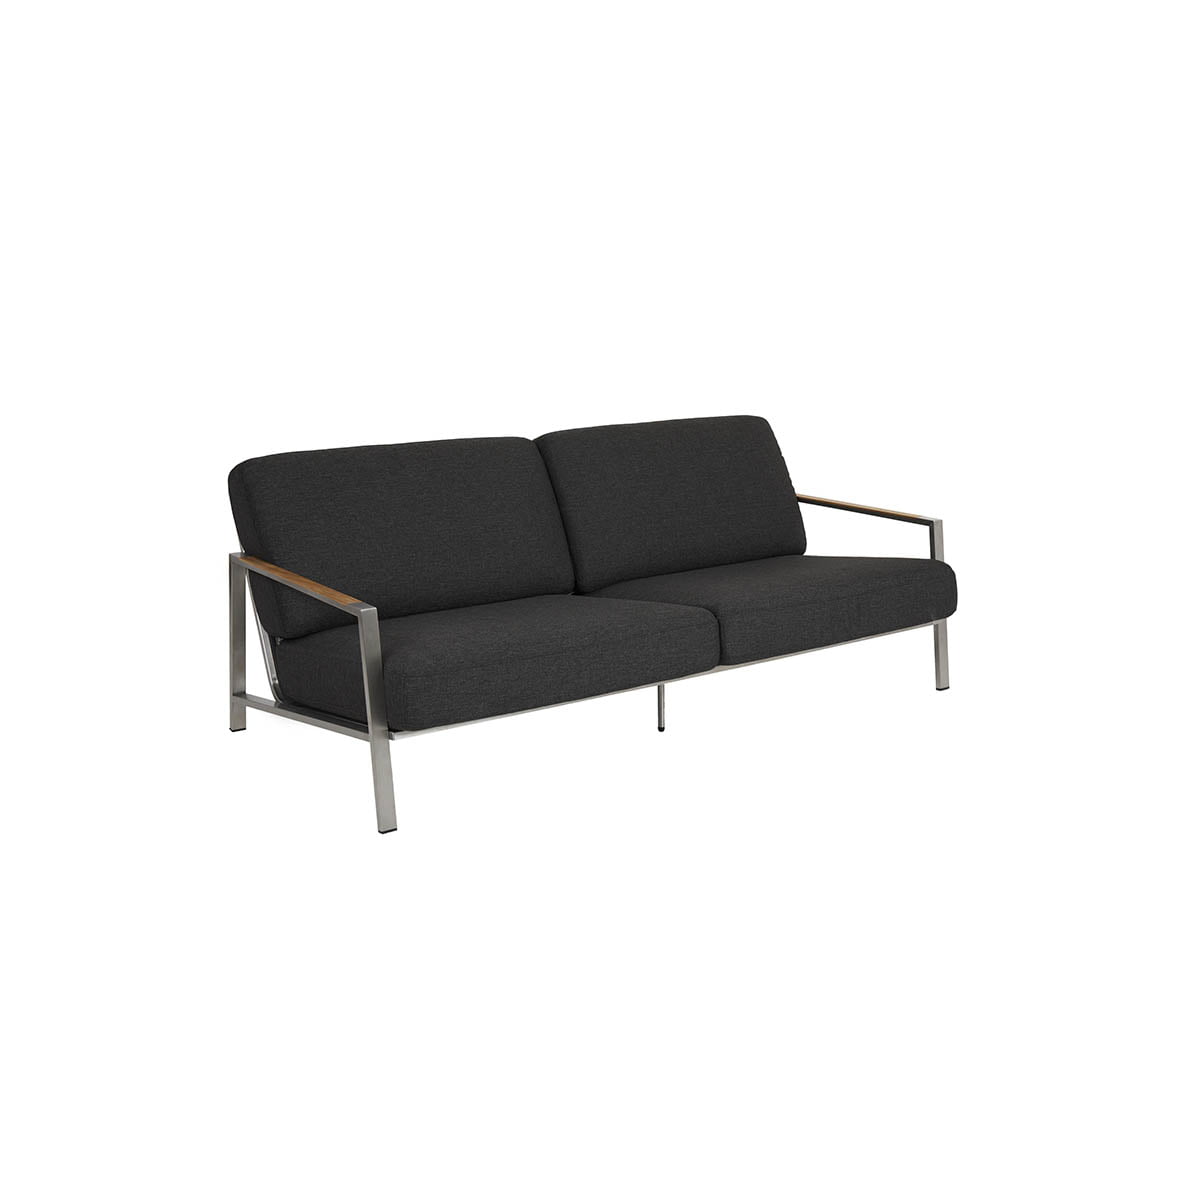 Sofa i rustfritt stål med teakdetaljer. Nydelig sittekomfort med puter i av skum